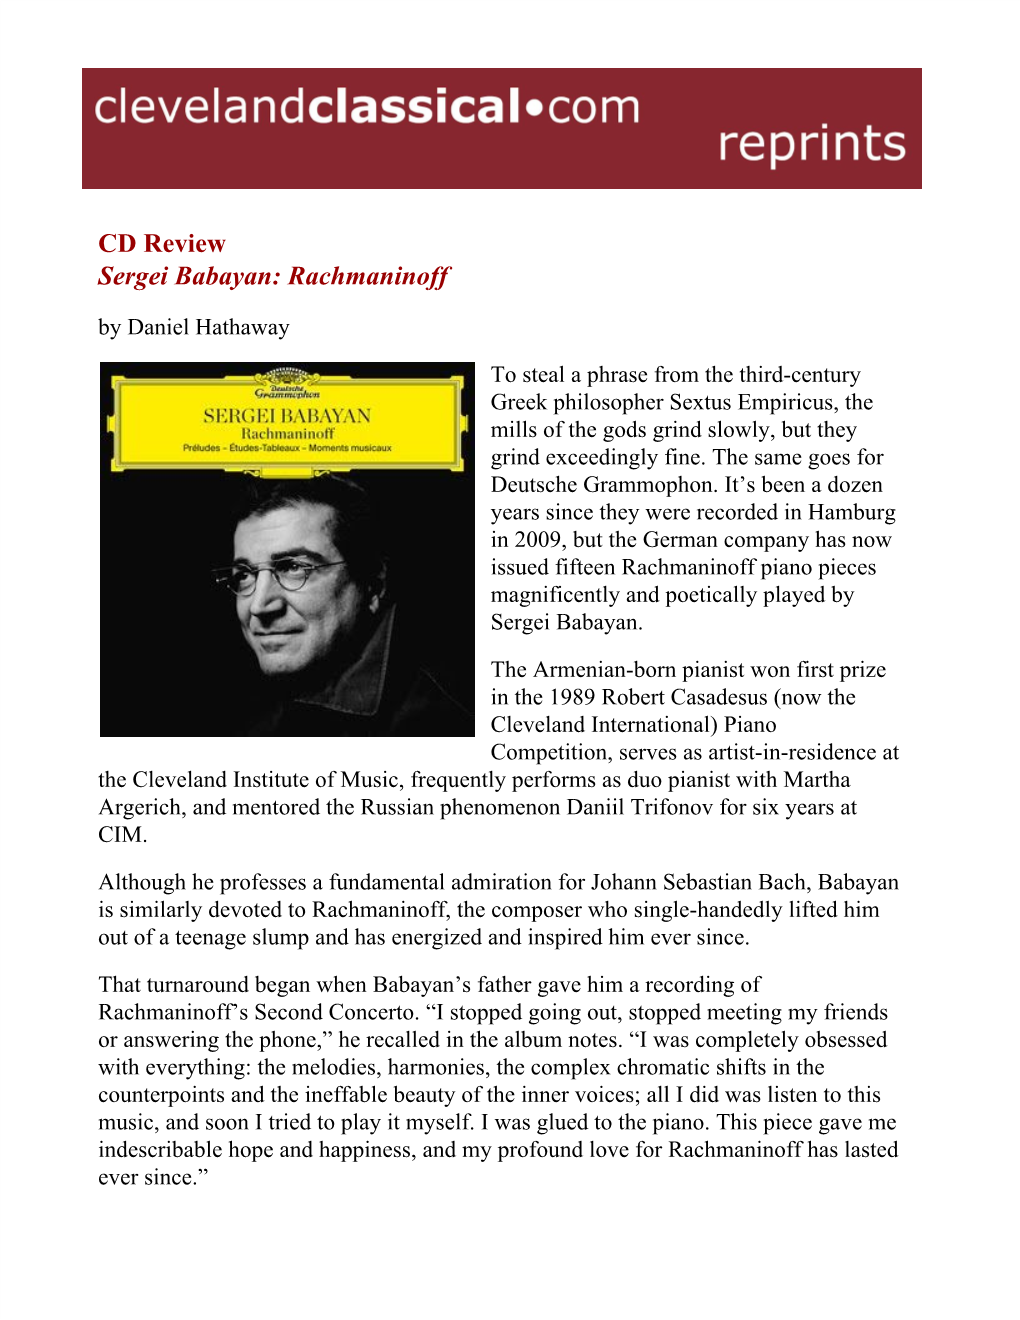 CD Review Sergei Babayan: Rachmaninoff by Daniel Hathaway